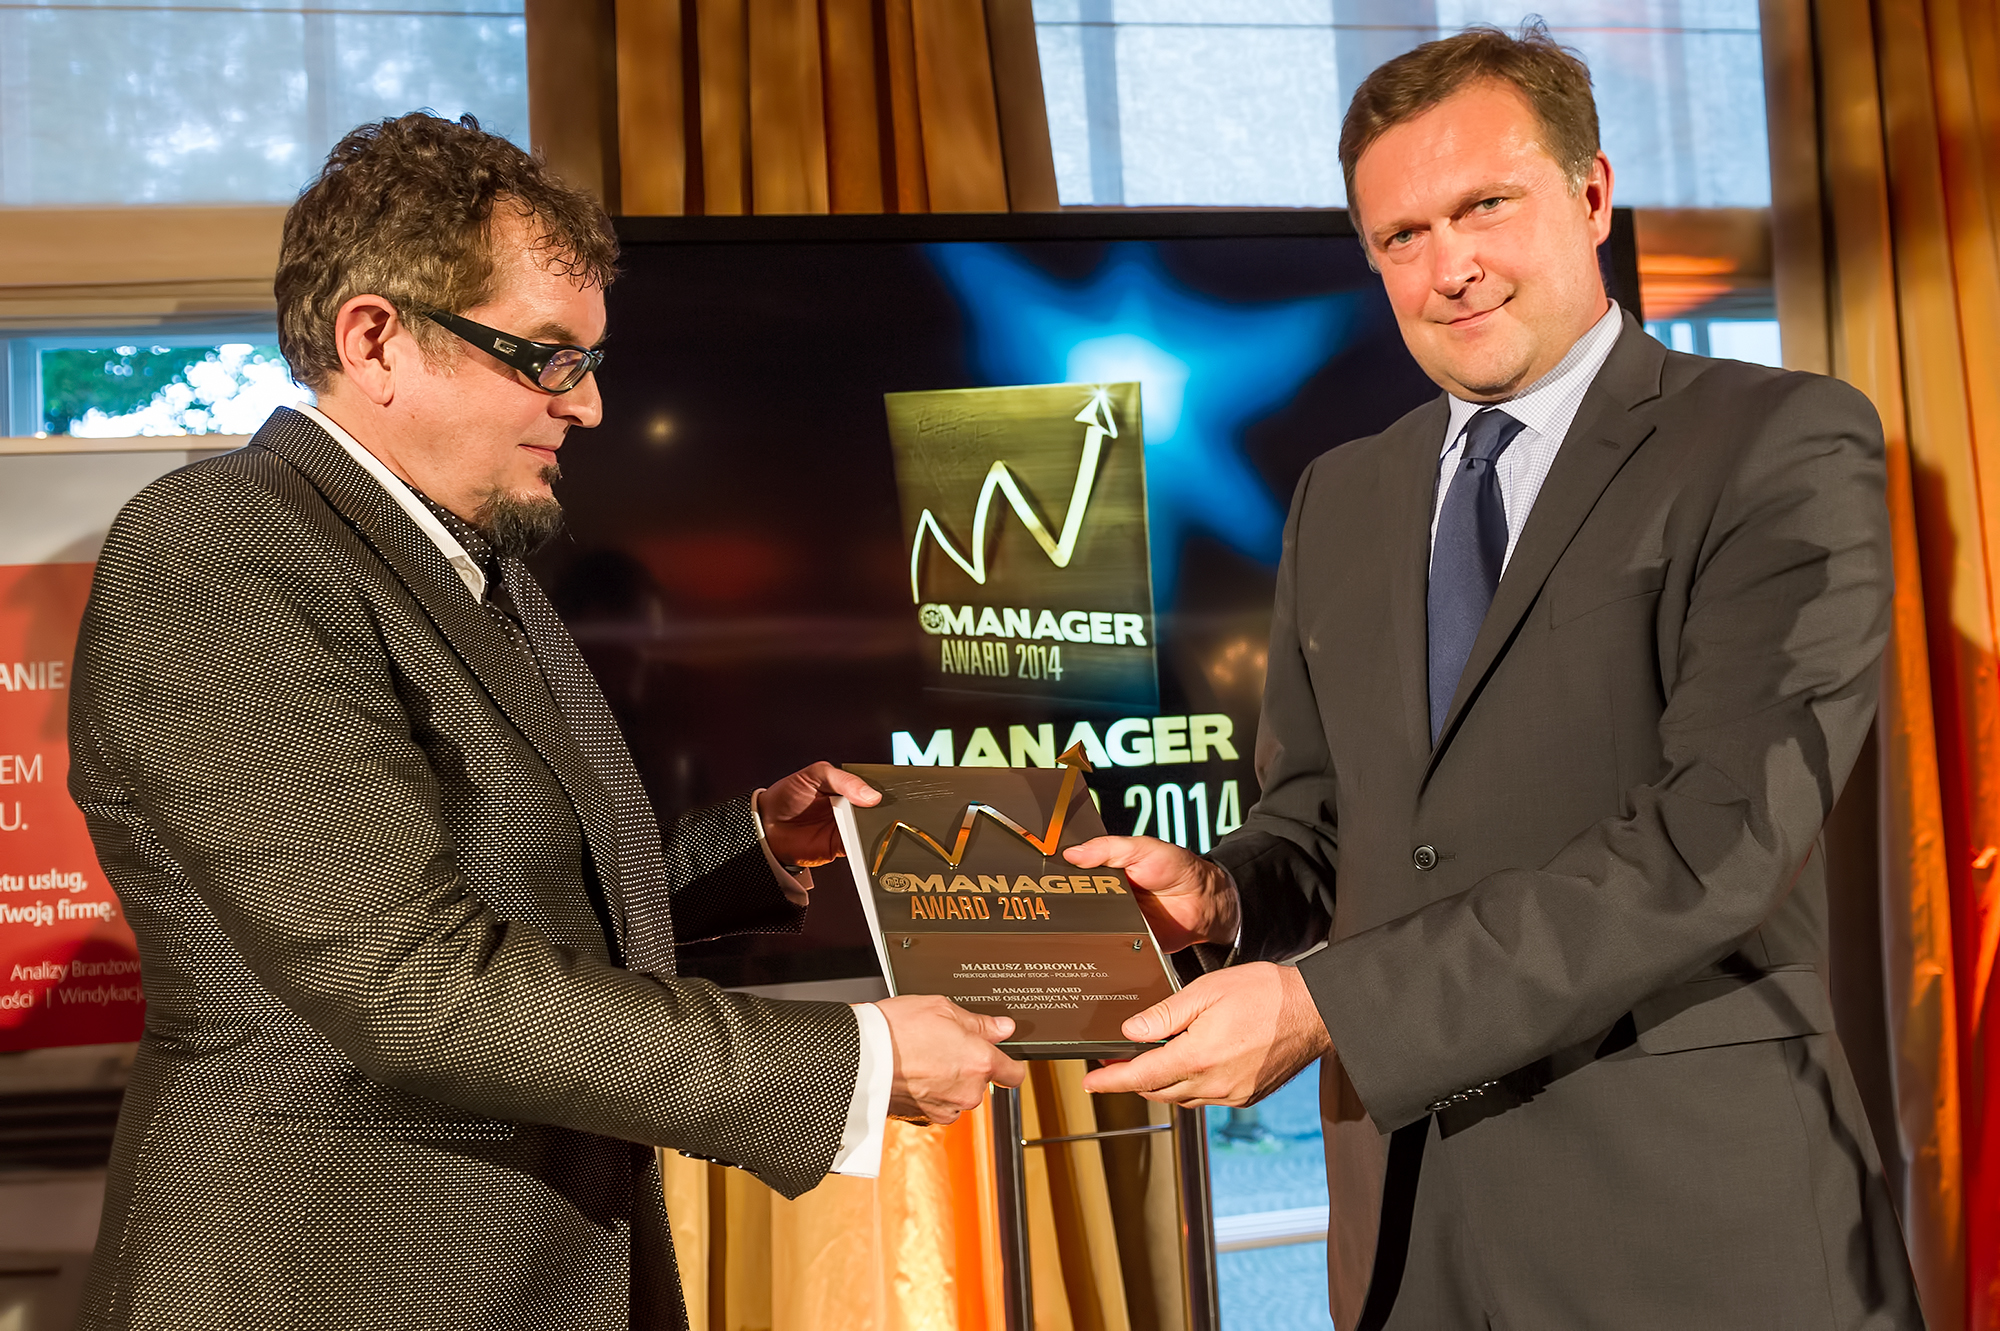 Mariusz Borowiak – Dyrektor Generalny Stock Polska laureatem Manager Award 2014